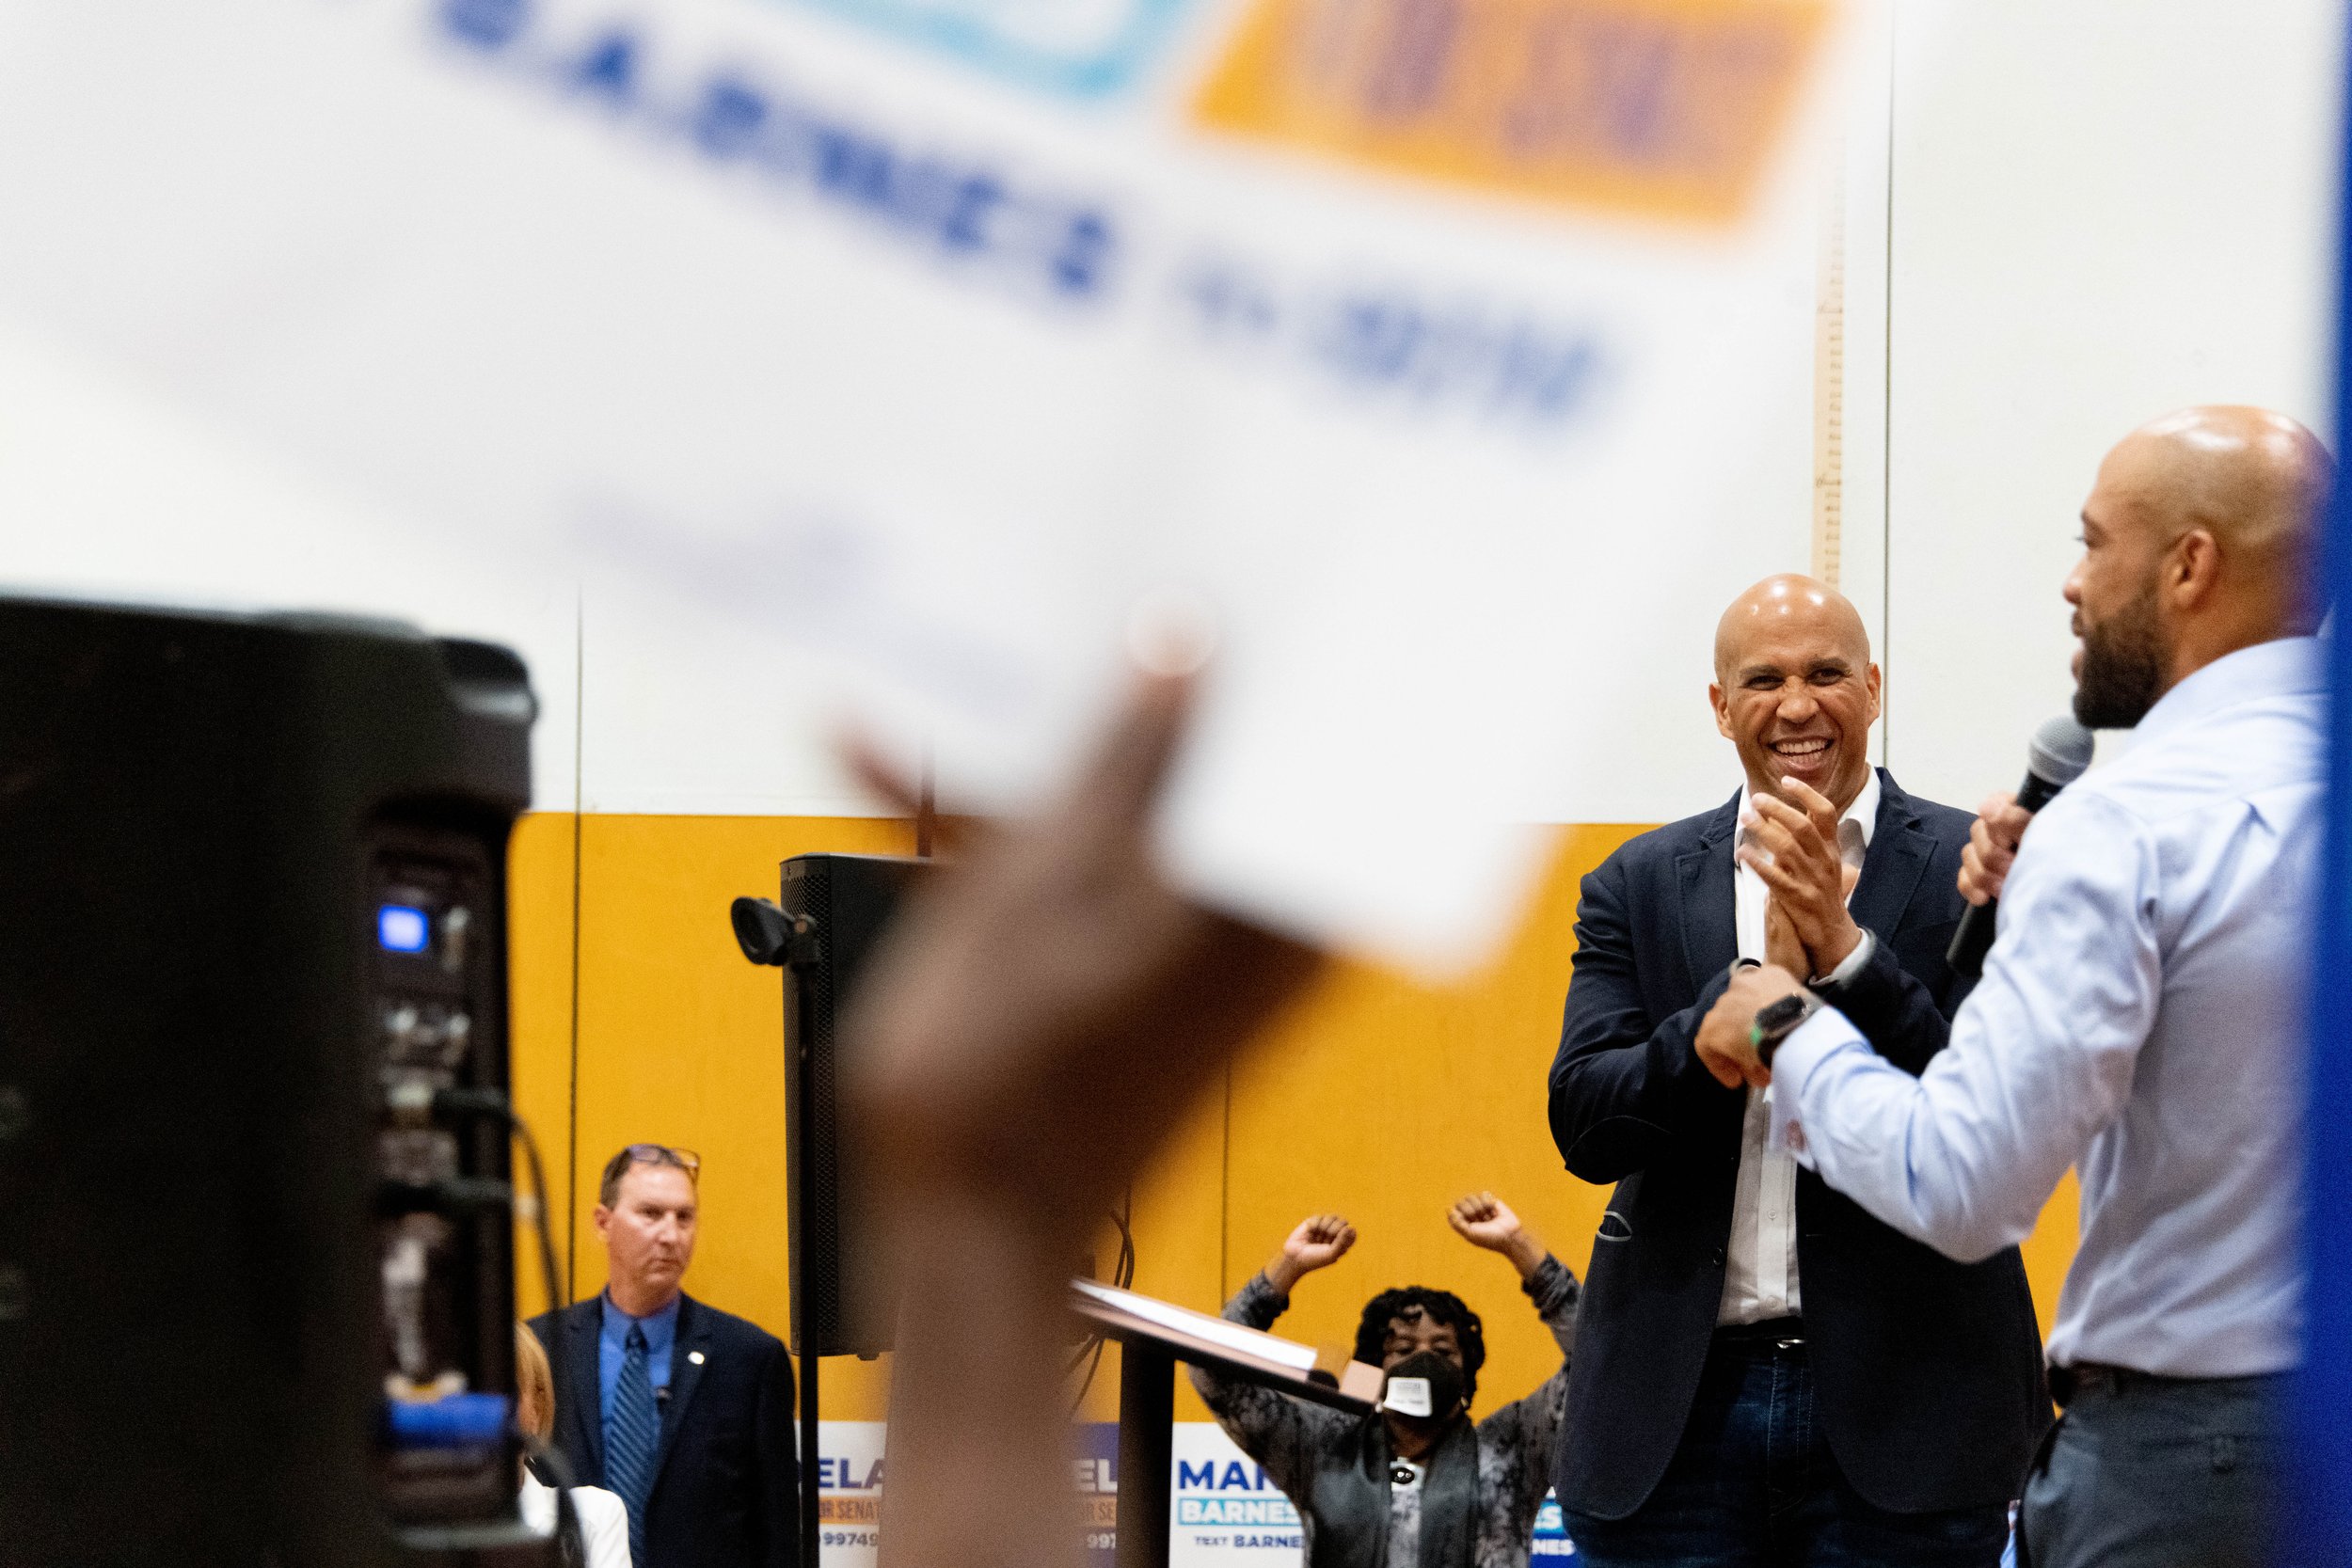 U.S. Senator Cory Booker and Lt. Governor Mandela Barnes at a campaign event in Wisconsin, 2022